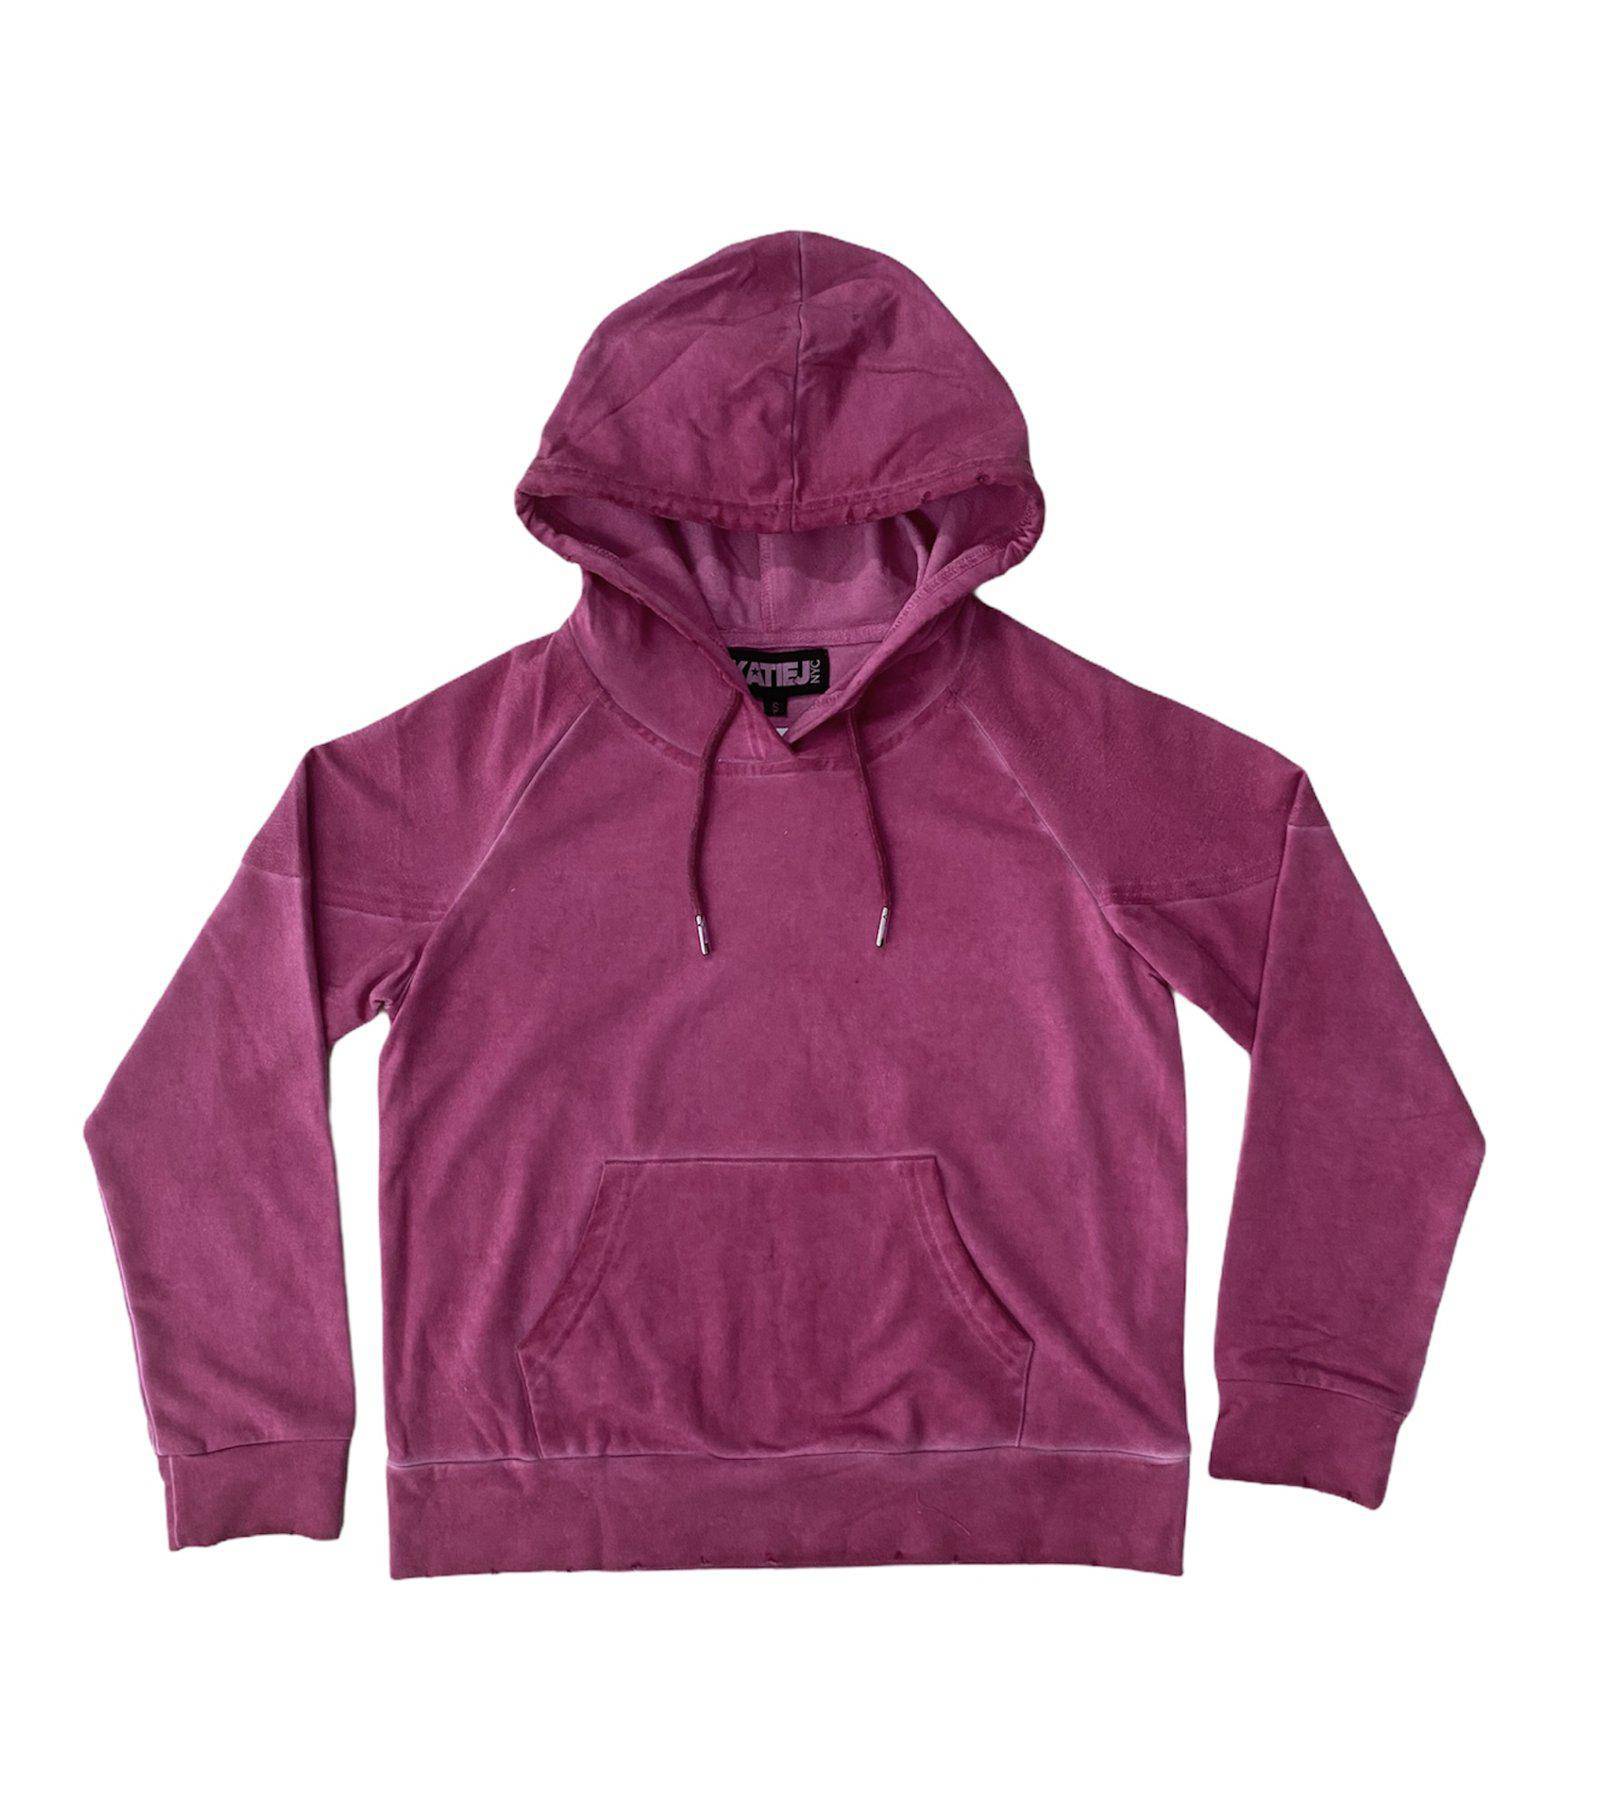 Hot Pink Stone-Wash Hoody Sweatshirt - Twinkle Twinkle Little One